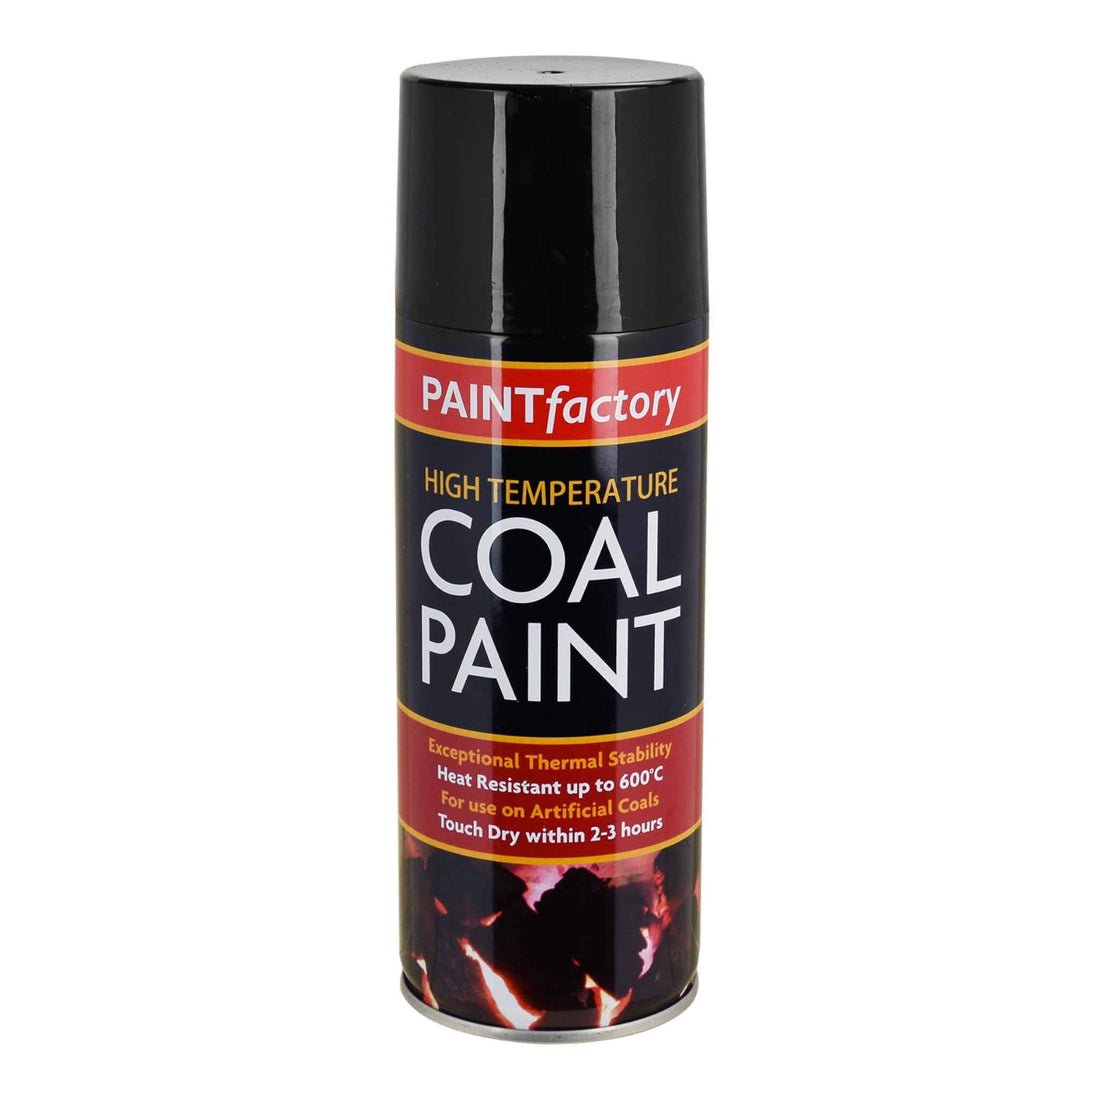 Paint Factory High Temperature Coal Paint | 400ml